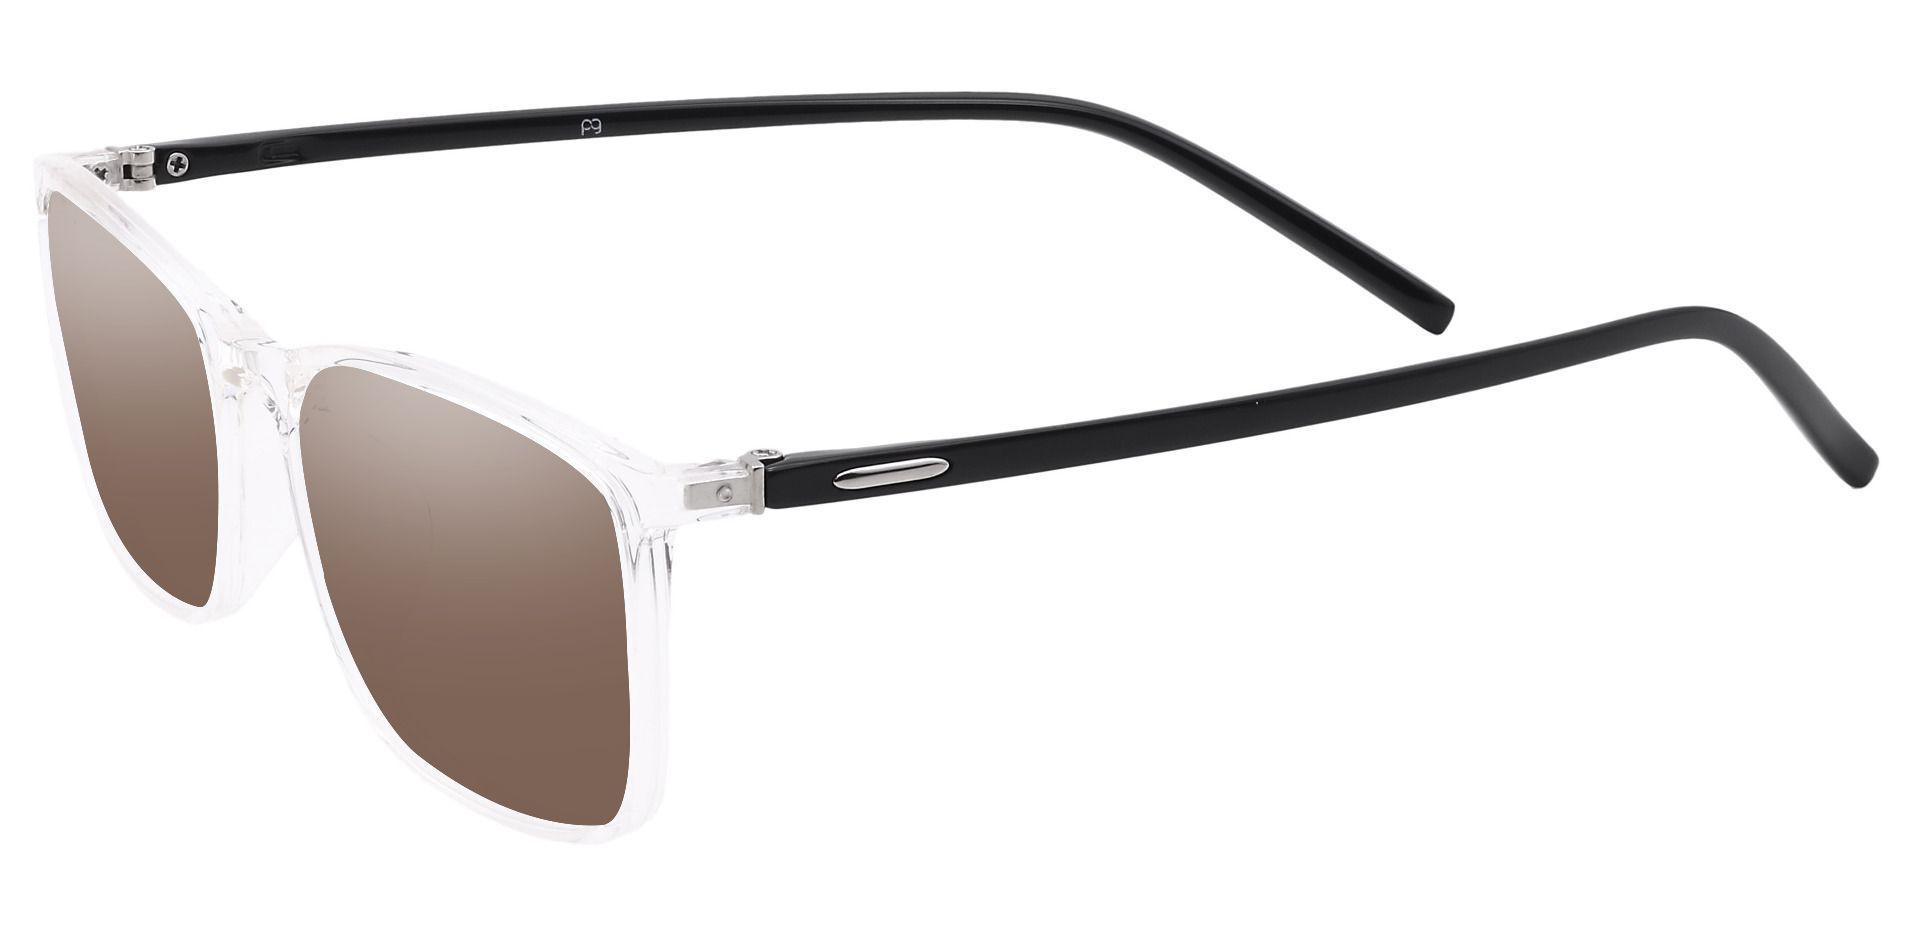 Fuji Rectangle Progressive Sunglasses - Clear Frame With Brown Lenses